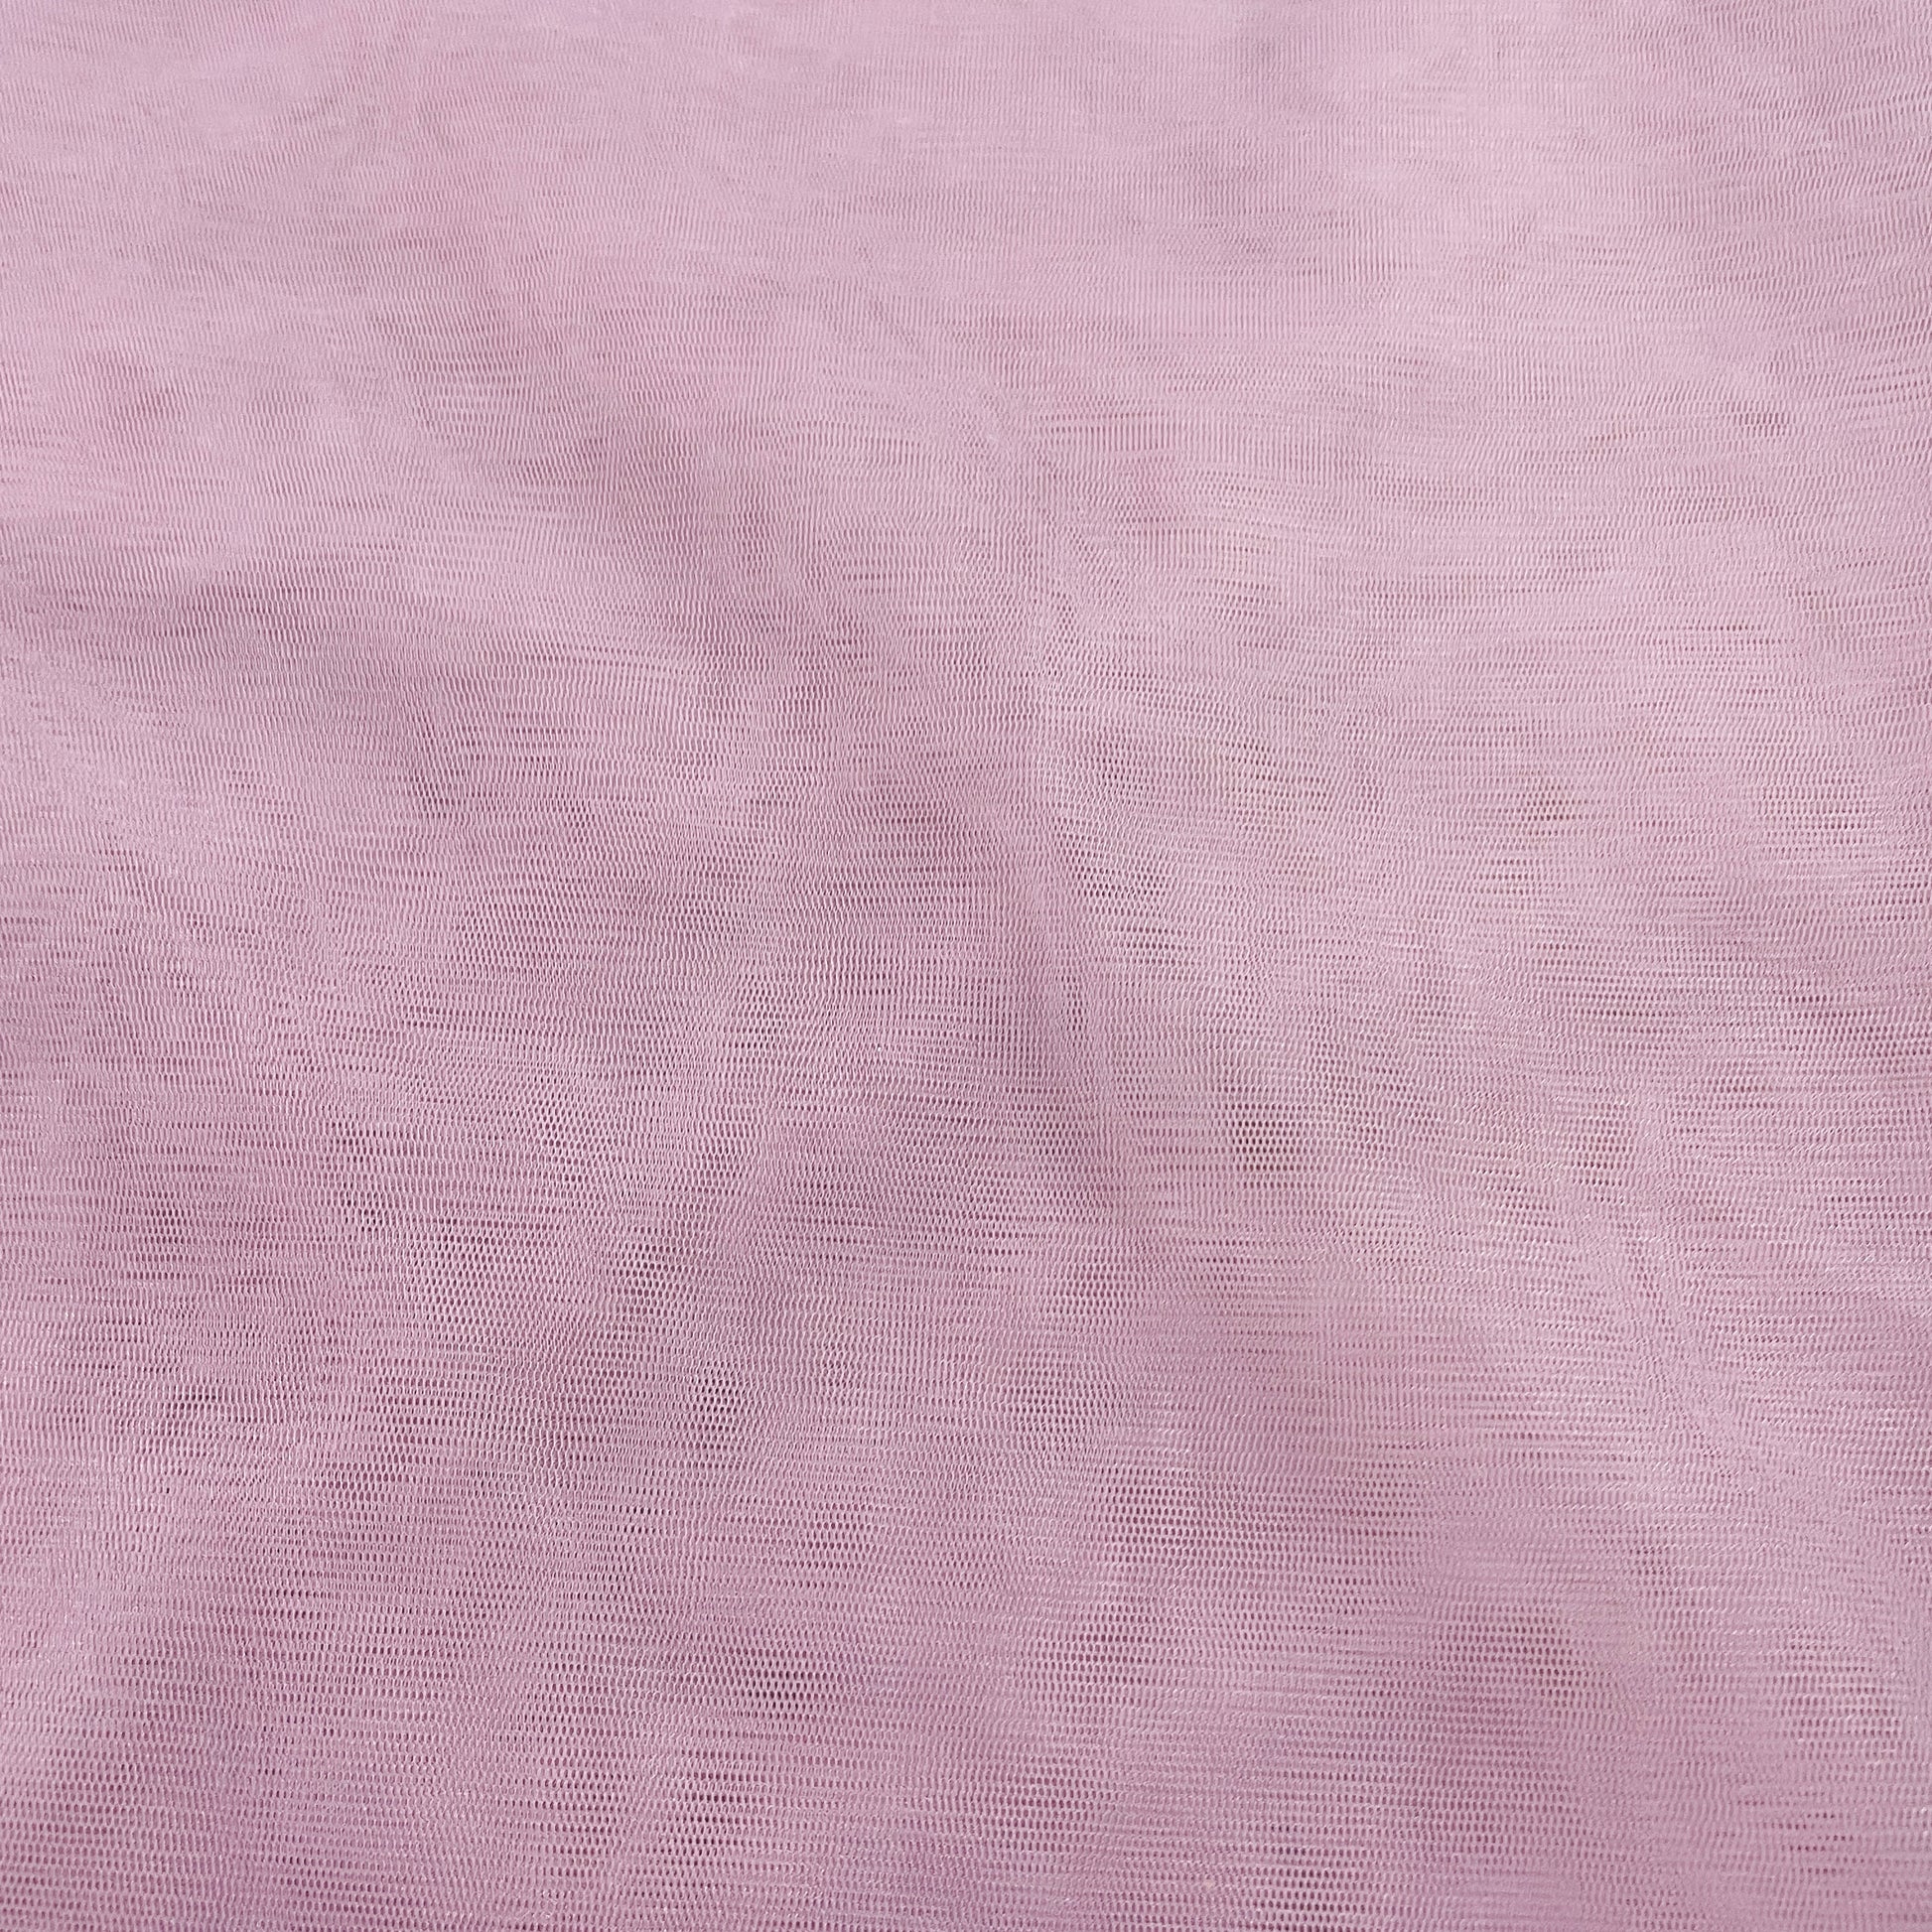 Grape Purple Solid Net Fabric - TradeUNO